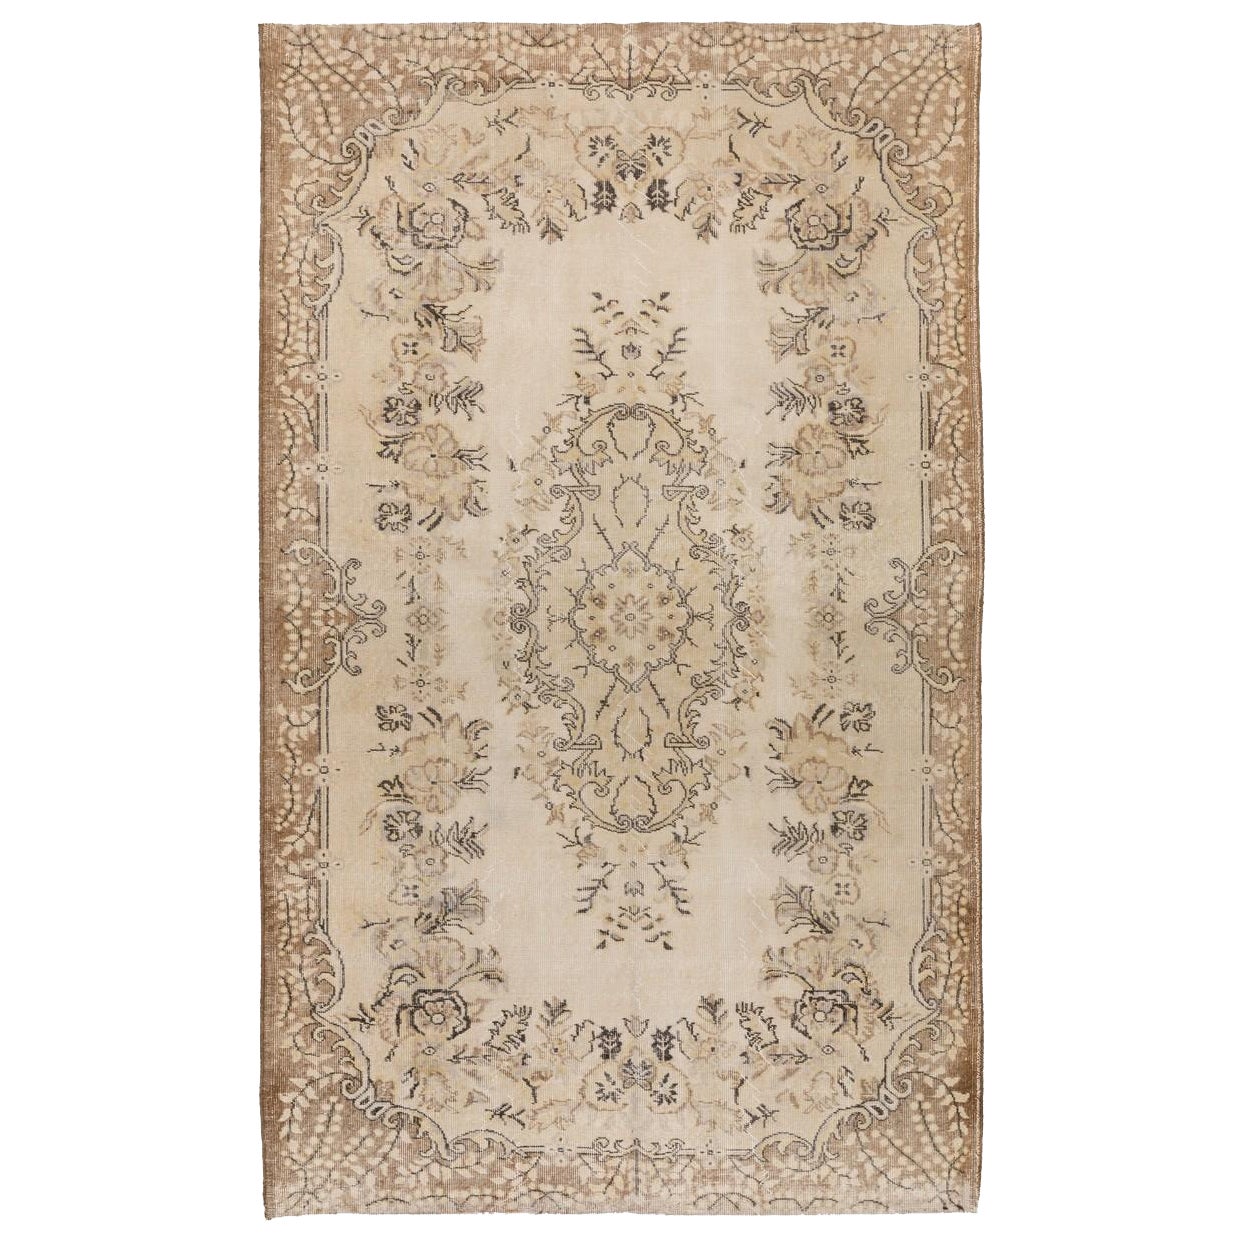 5.5x8.7 Ft Baroque Design Handmade Vintage Area Rug. Faded Turkish Oushak Carpet